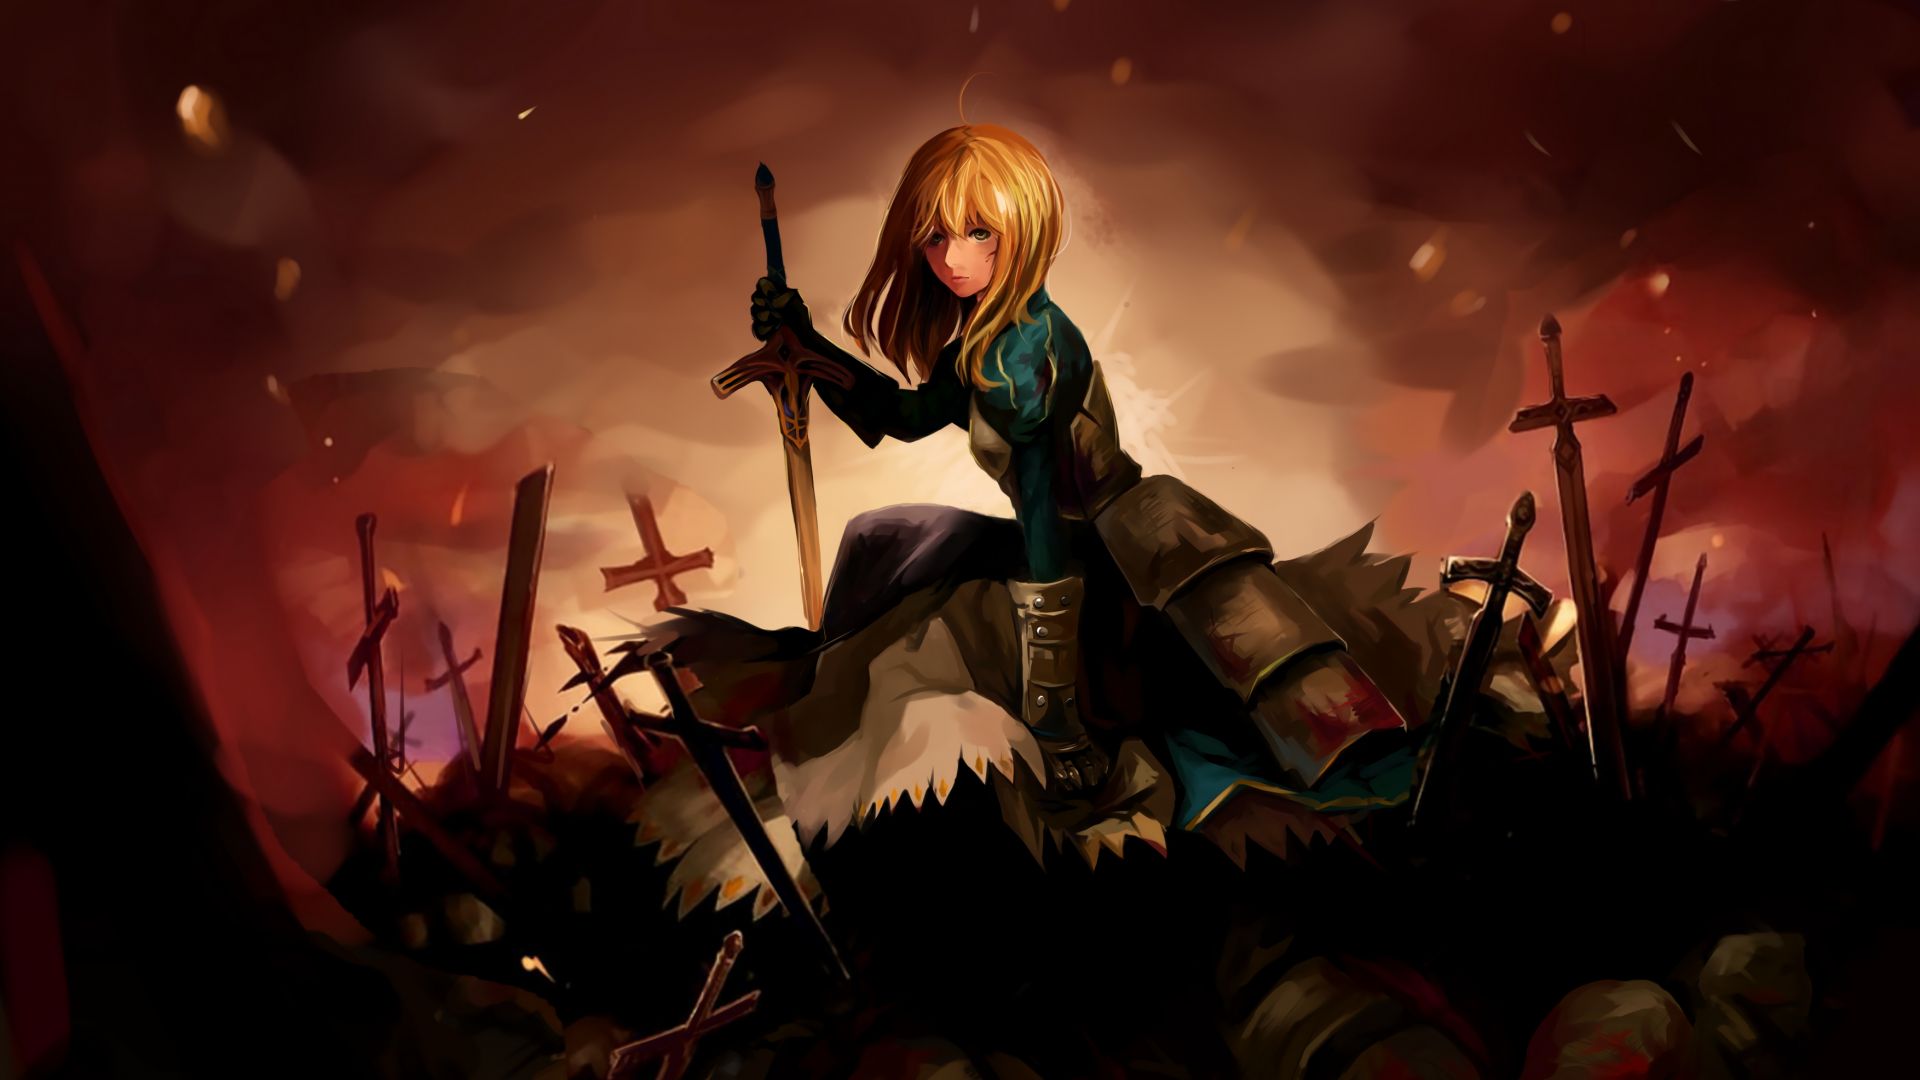 Desktop wallpaper saber war field anime girl fate series art hd image picture background mxlqo